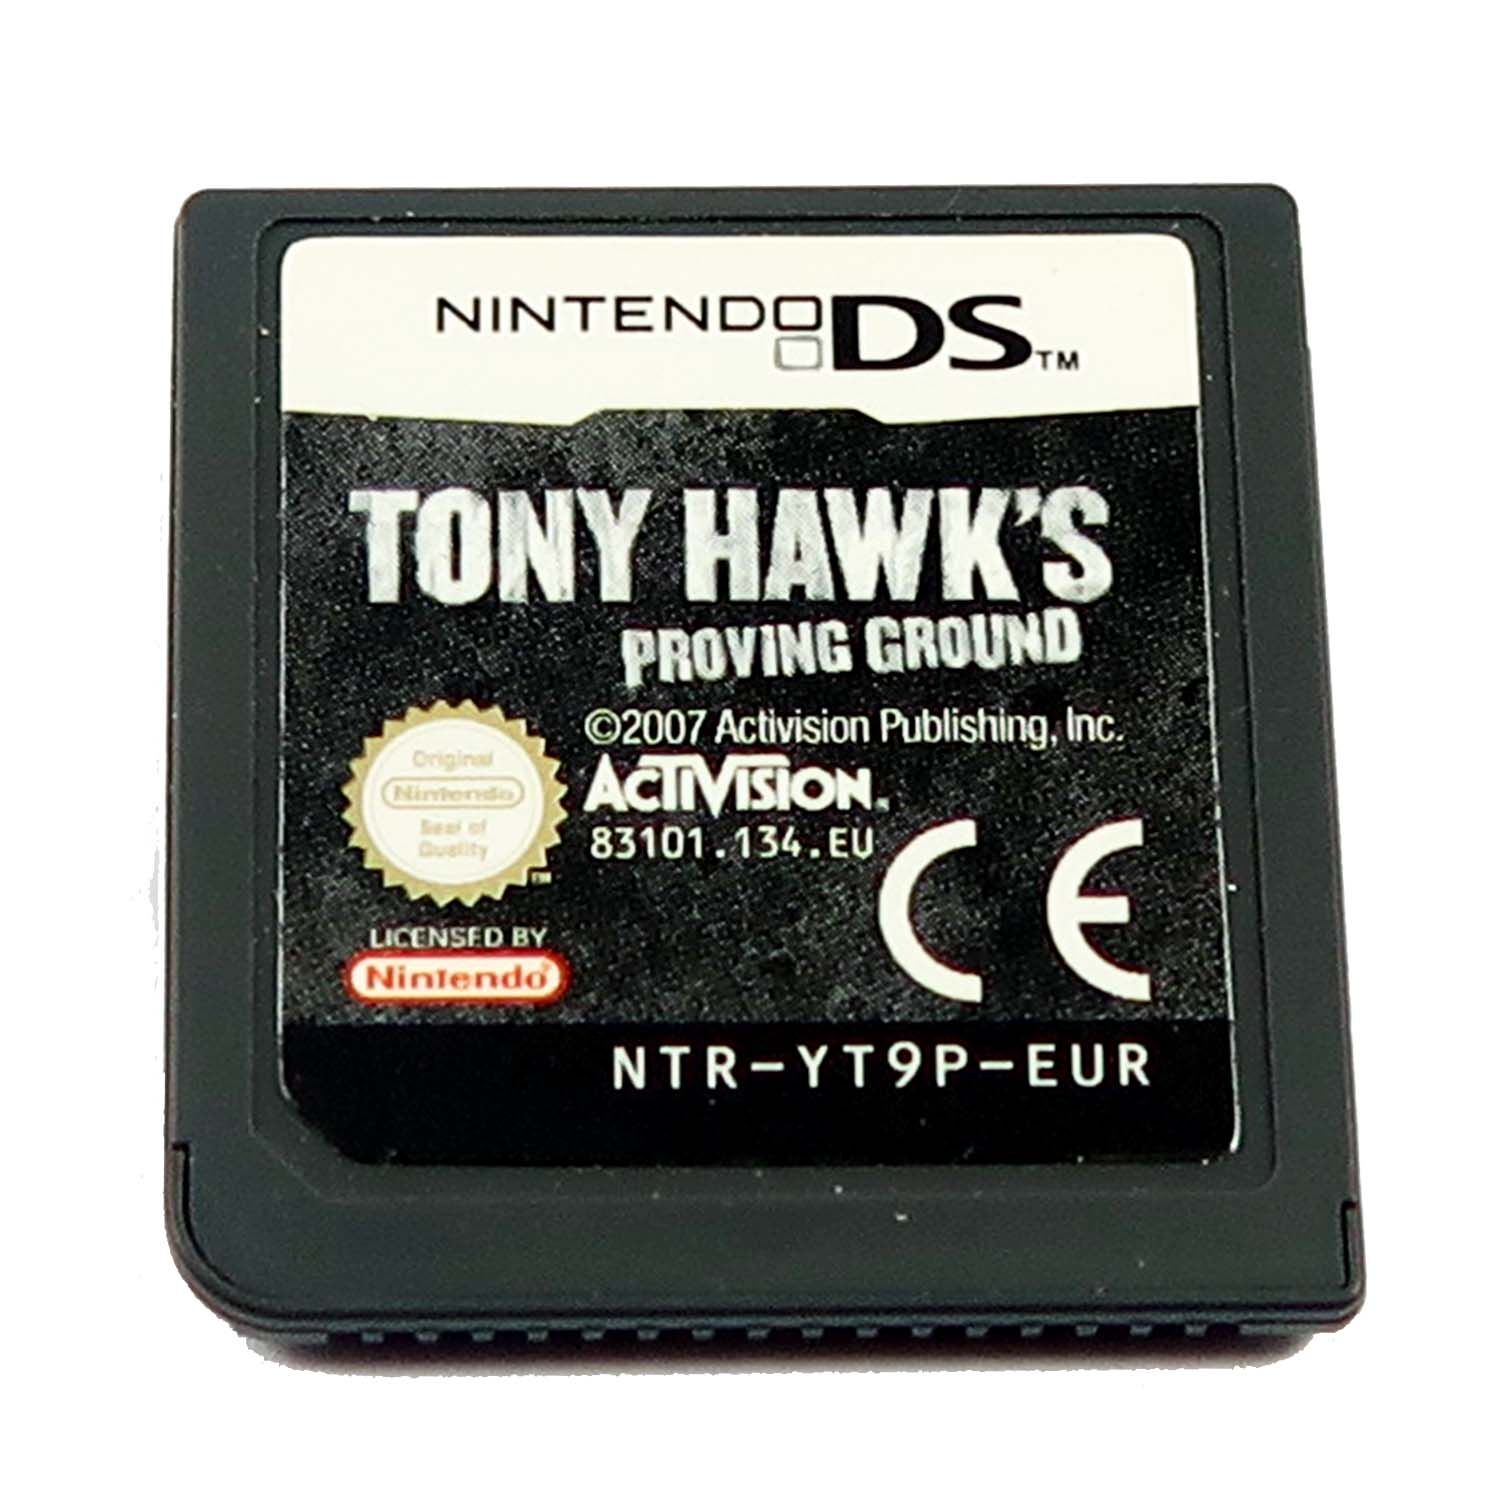 Tony Hawk's Proving Ground - Nintendo DS